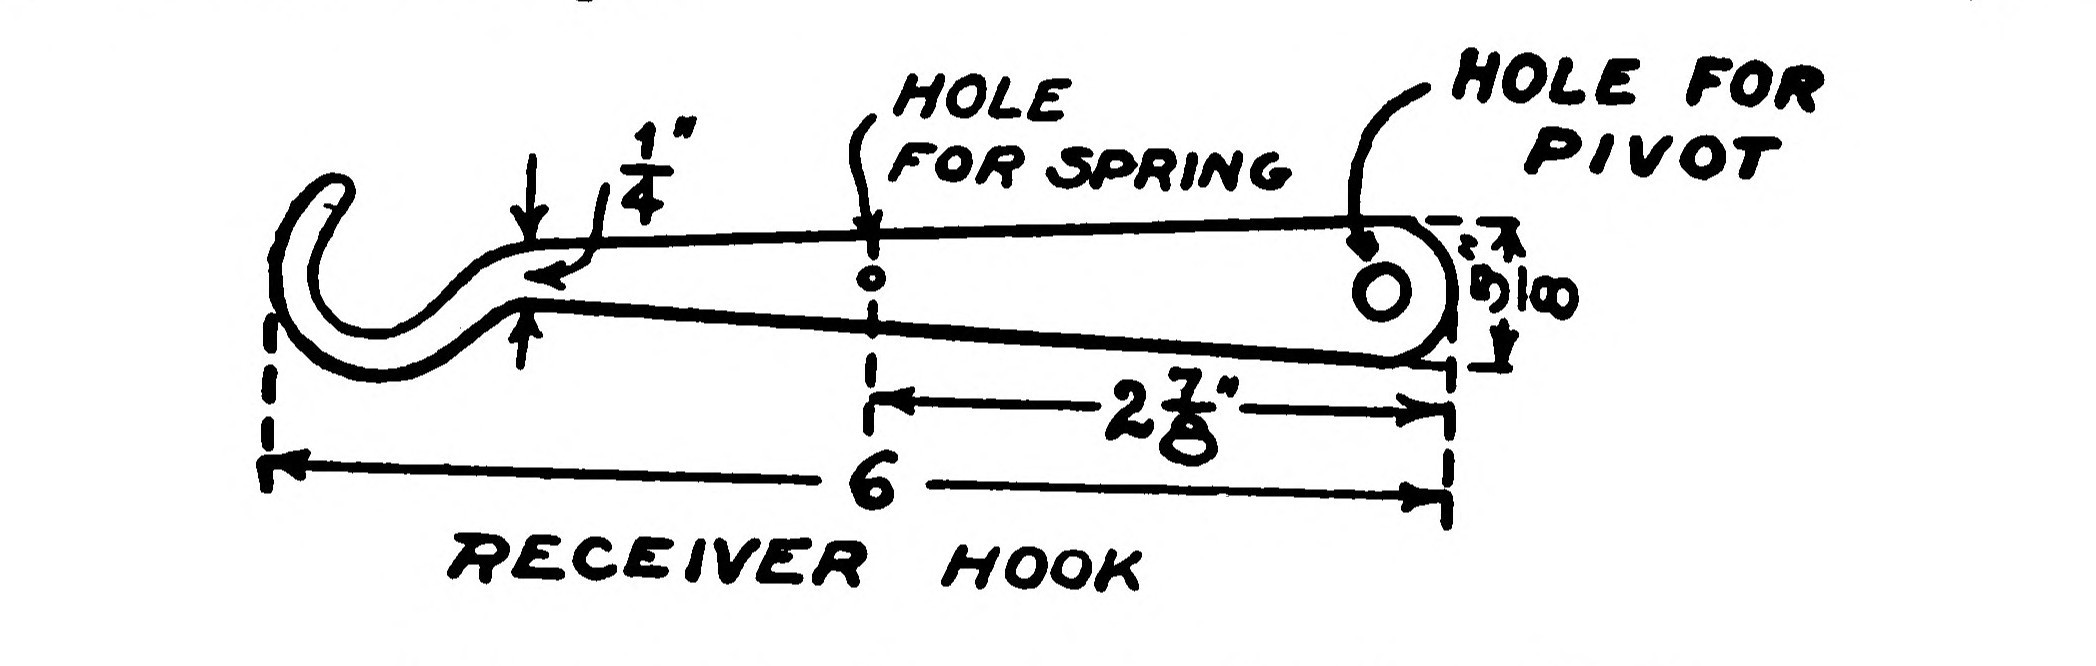 FIG. 95.—Details of the Receiver Hook.